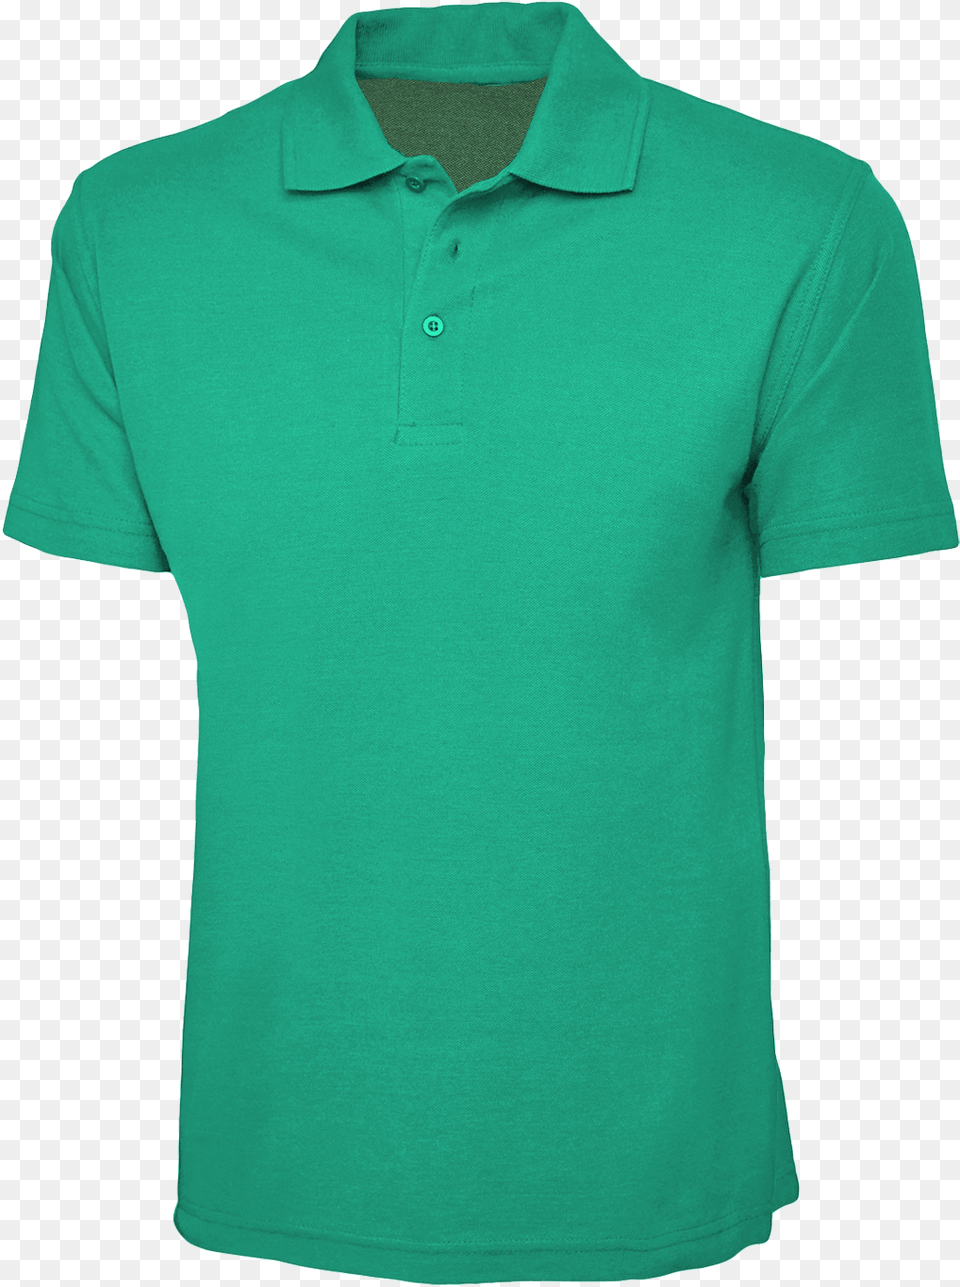 Plain Dark Grey Polo Shirt Transparent Cartoons Mint Green Polo Shirt Plain, Clothing, T-shirt Png